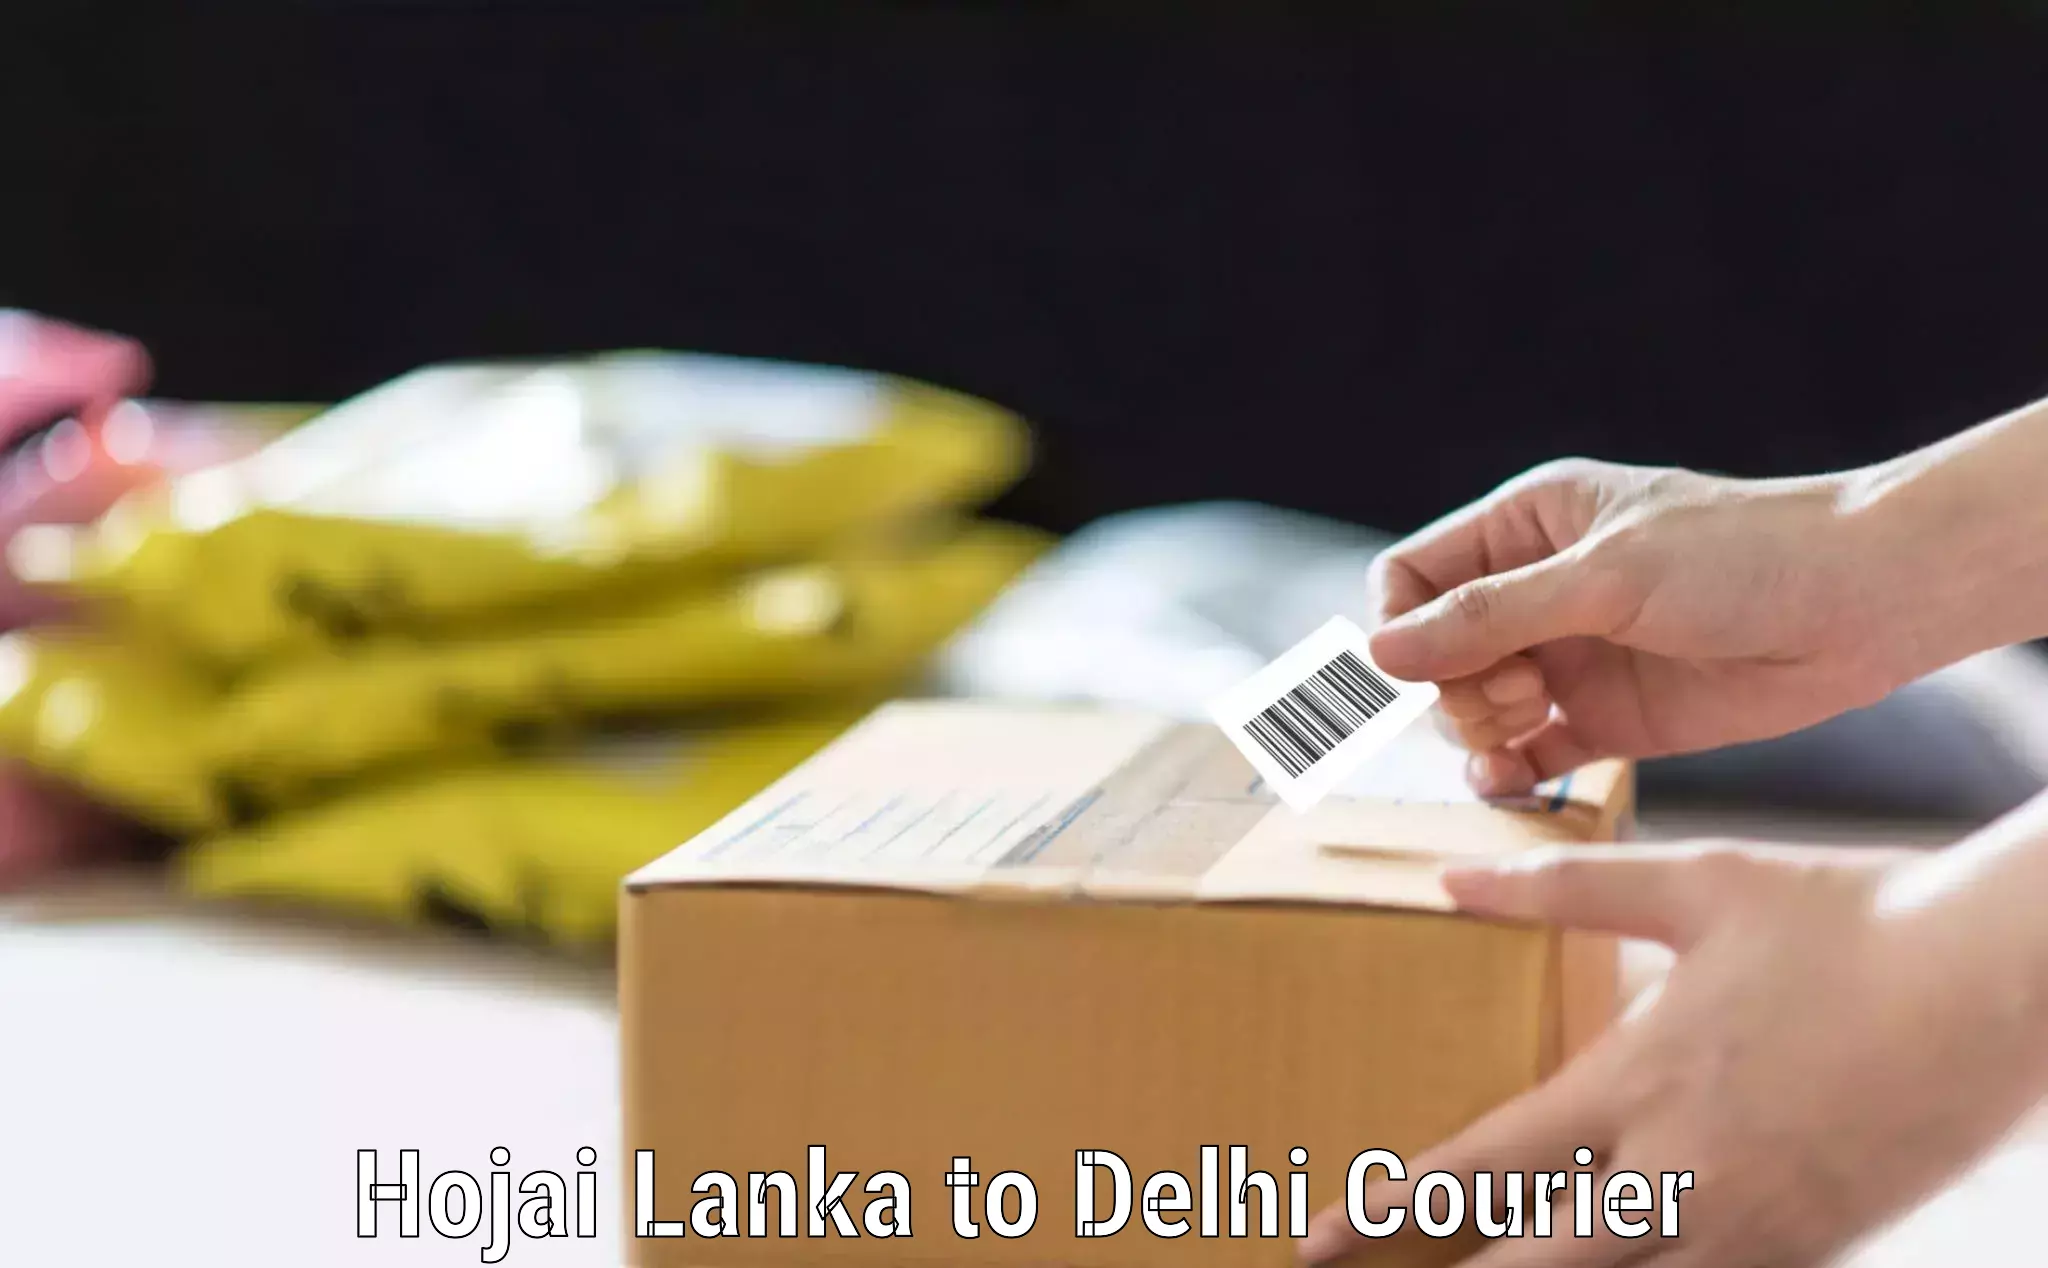 Online luggage shipping booking Hojai Lanka to Delhi